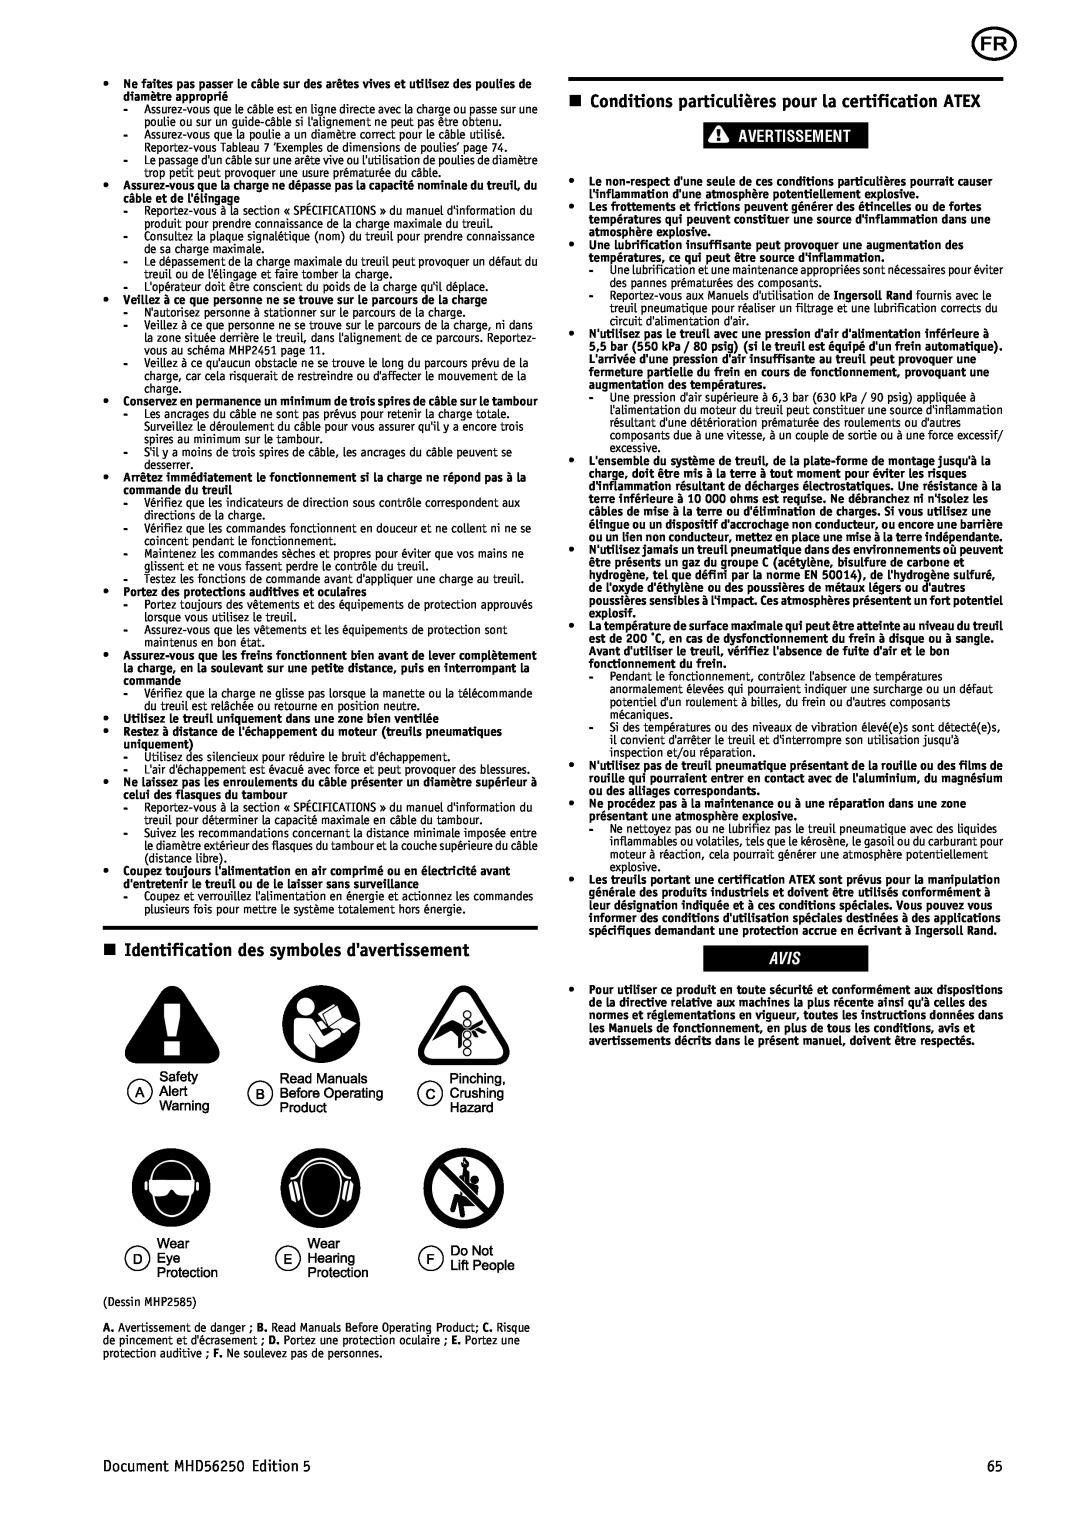 Ingersoll-Rand manual n Identification des symboles davertissement, Avertissement, Avis, Document MHD56250 Edition 